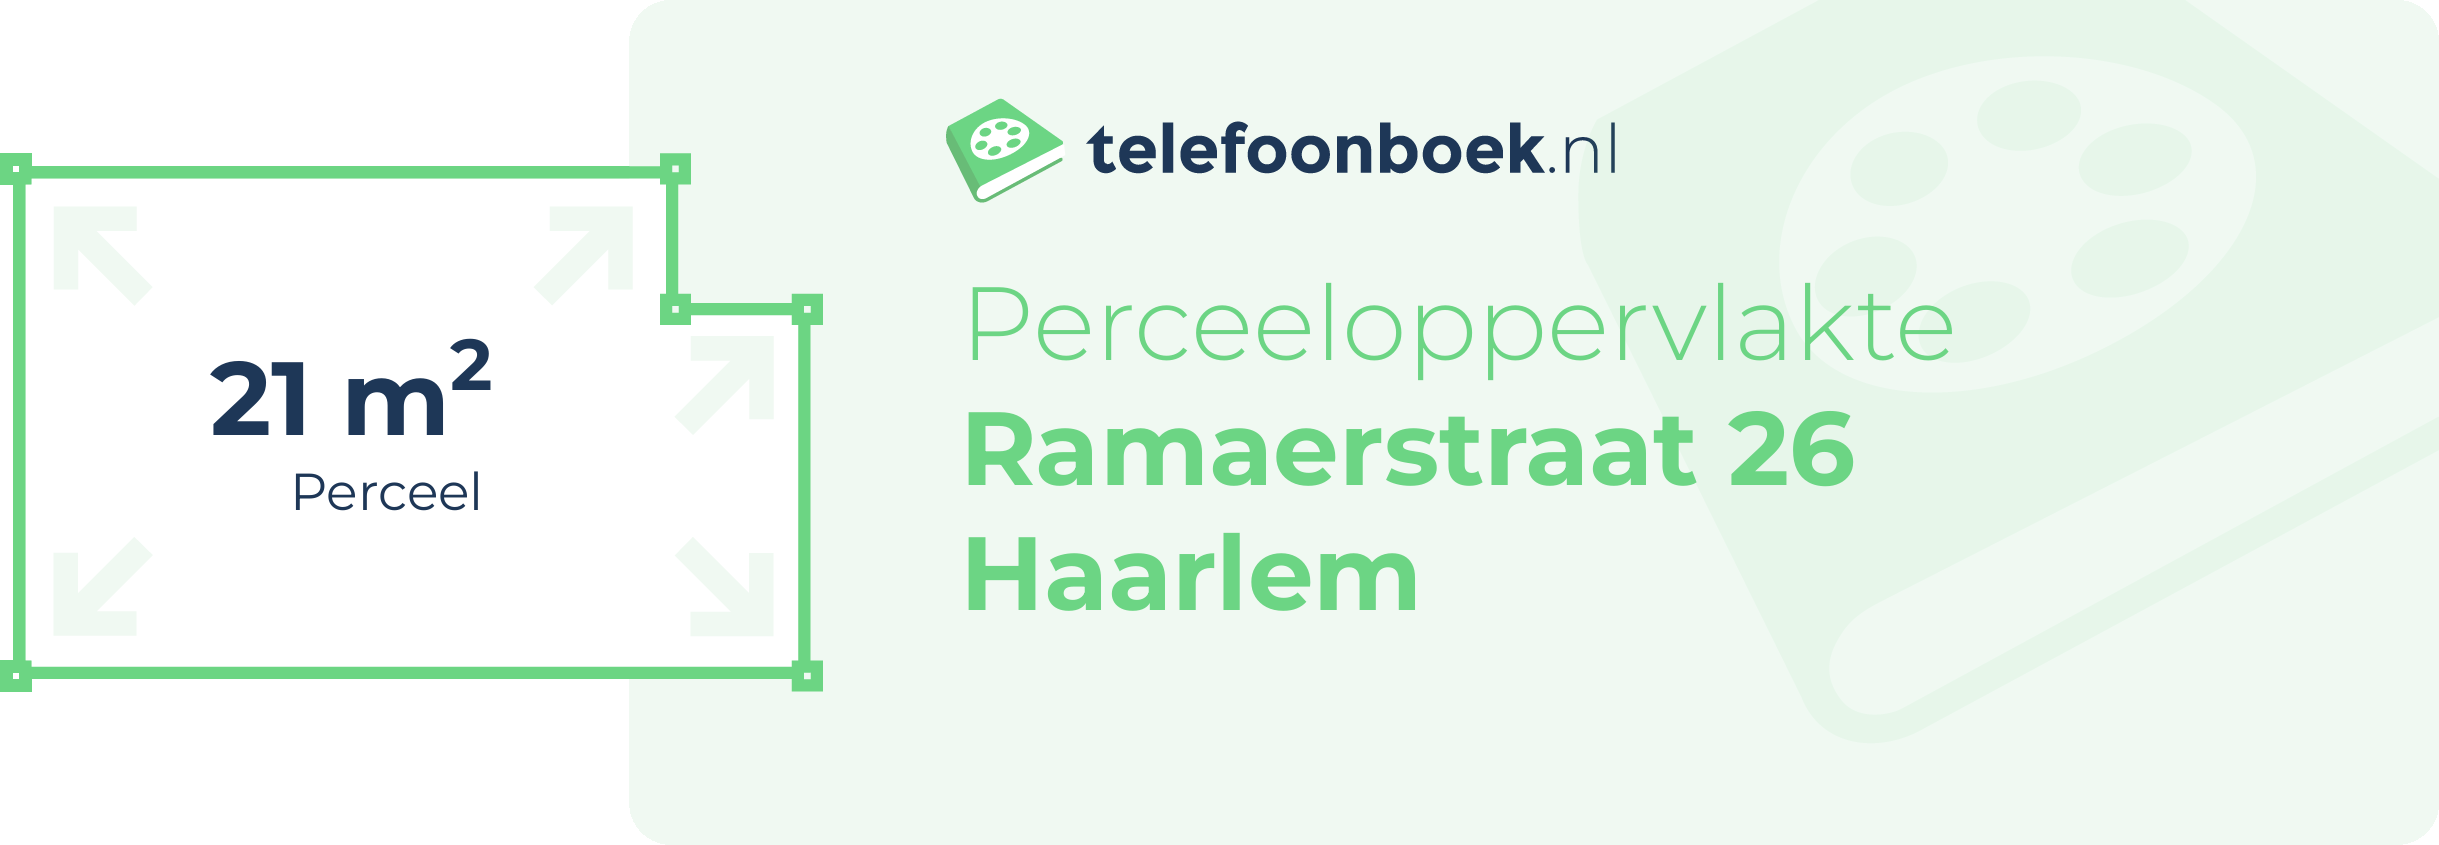 Perceeloppervlakte Ramaerstraat 26 Haarlem